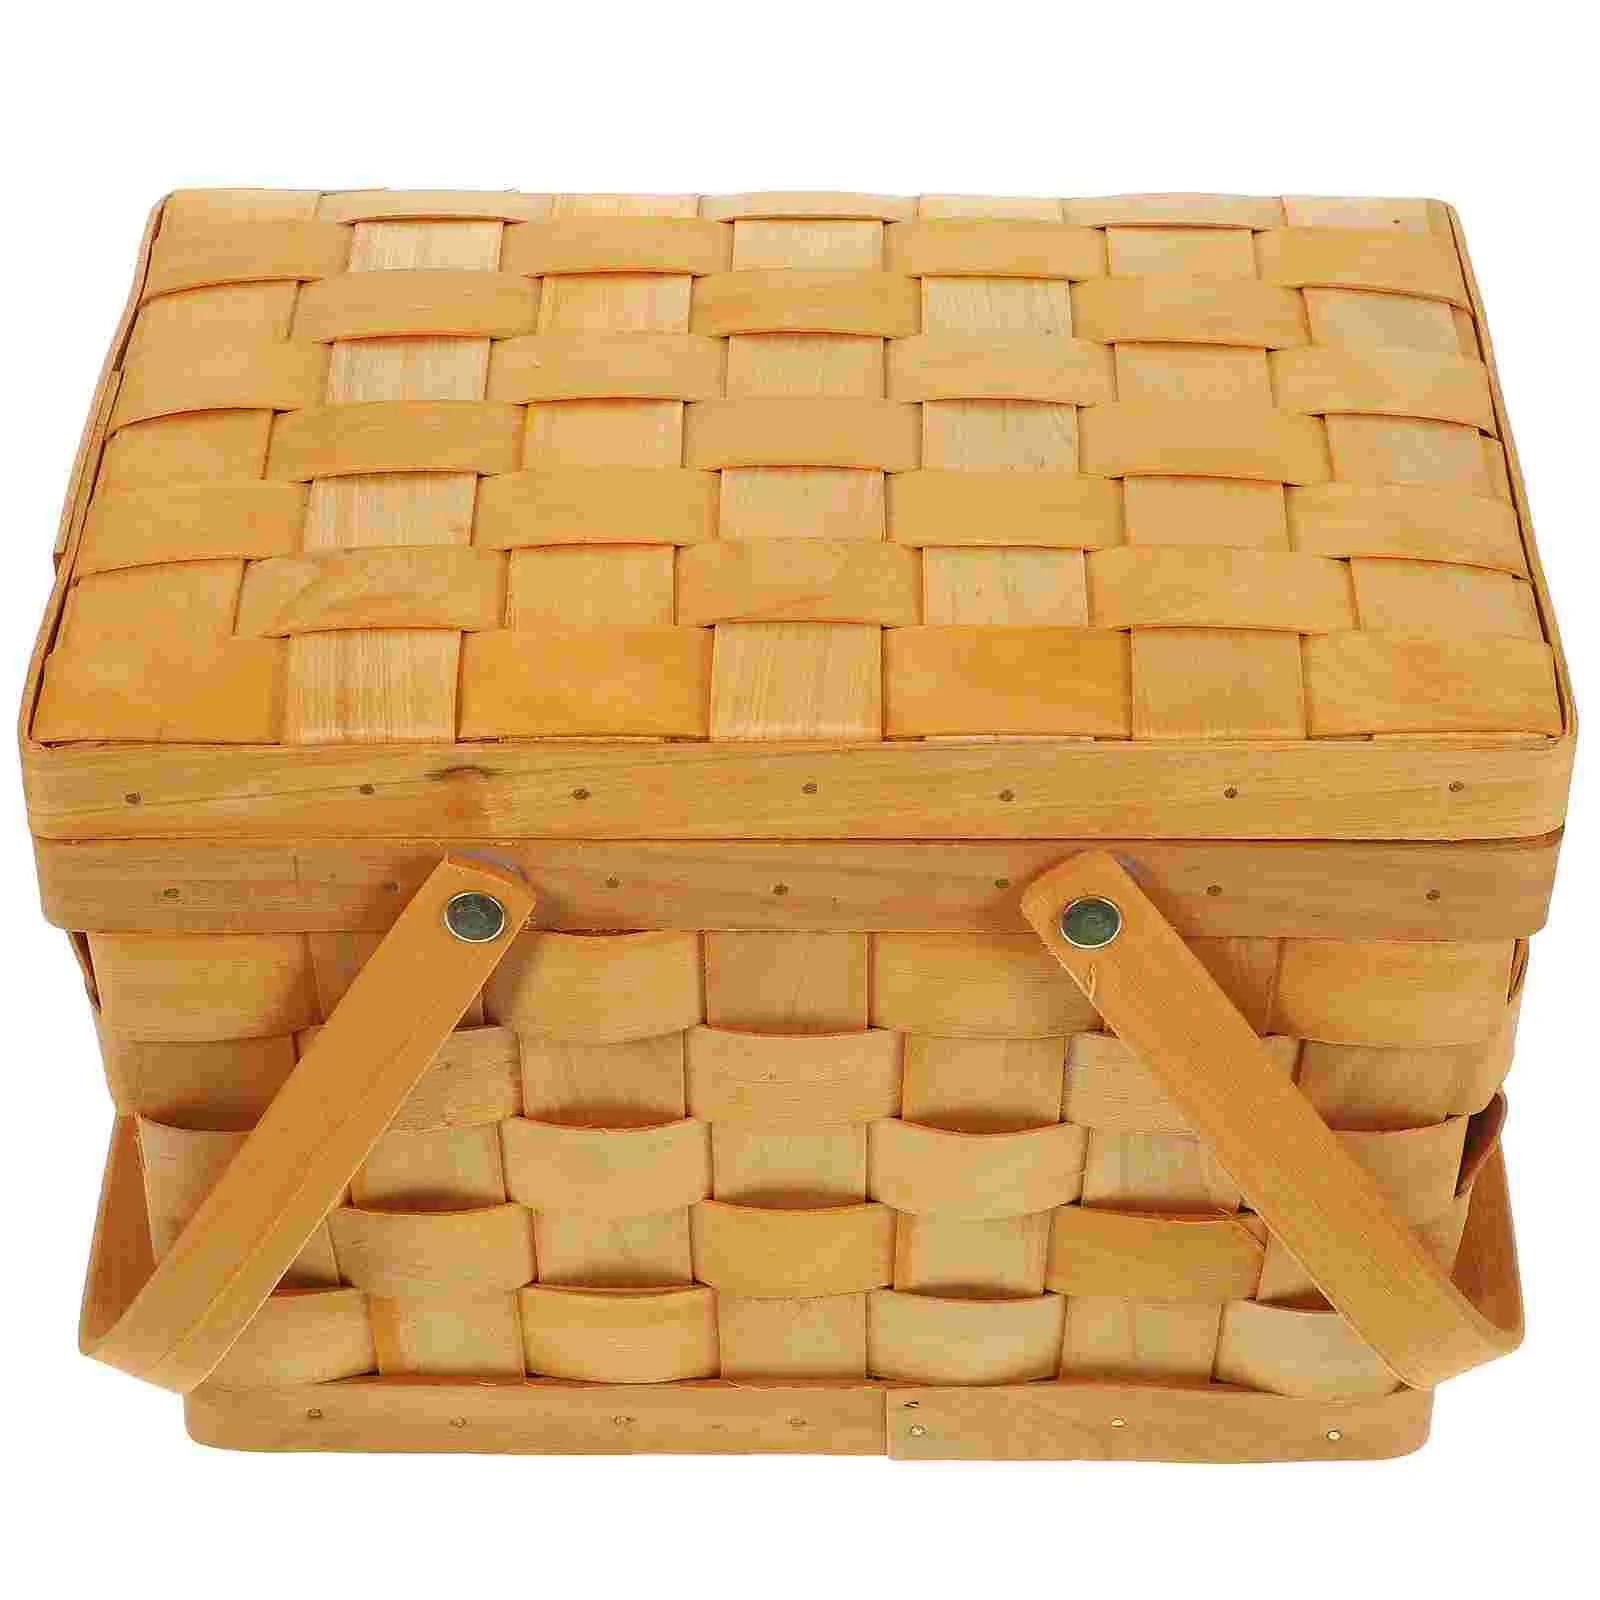 

Wooden Picnic Basket Small Rustic Decor Baskets Handles Storage Garden Gathering Vegetables Lidded Woven